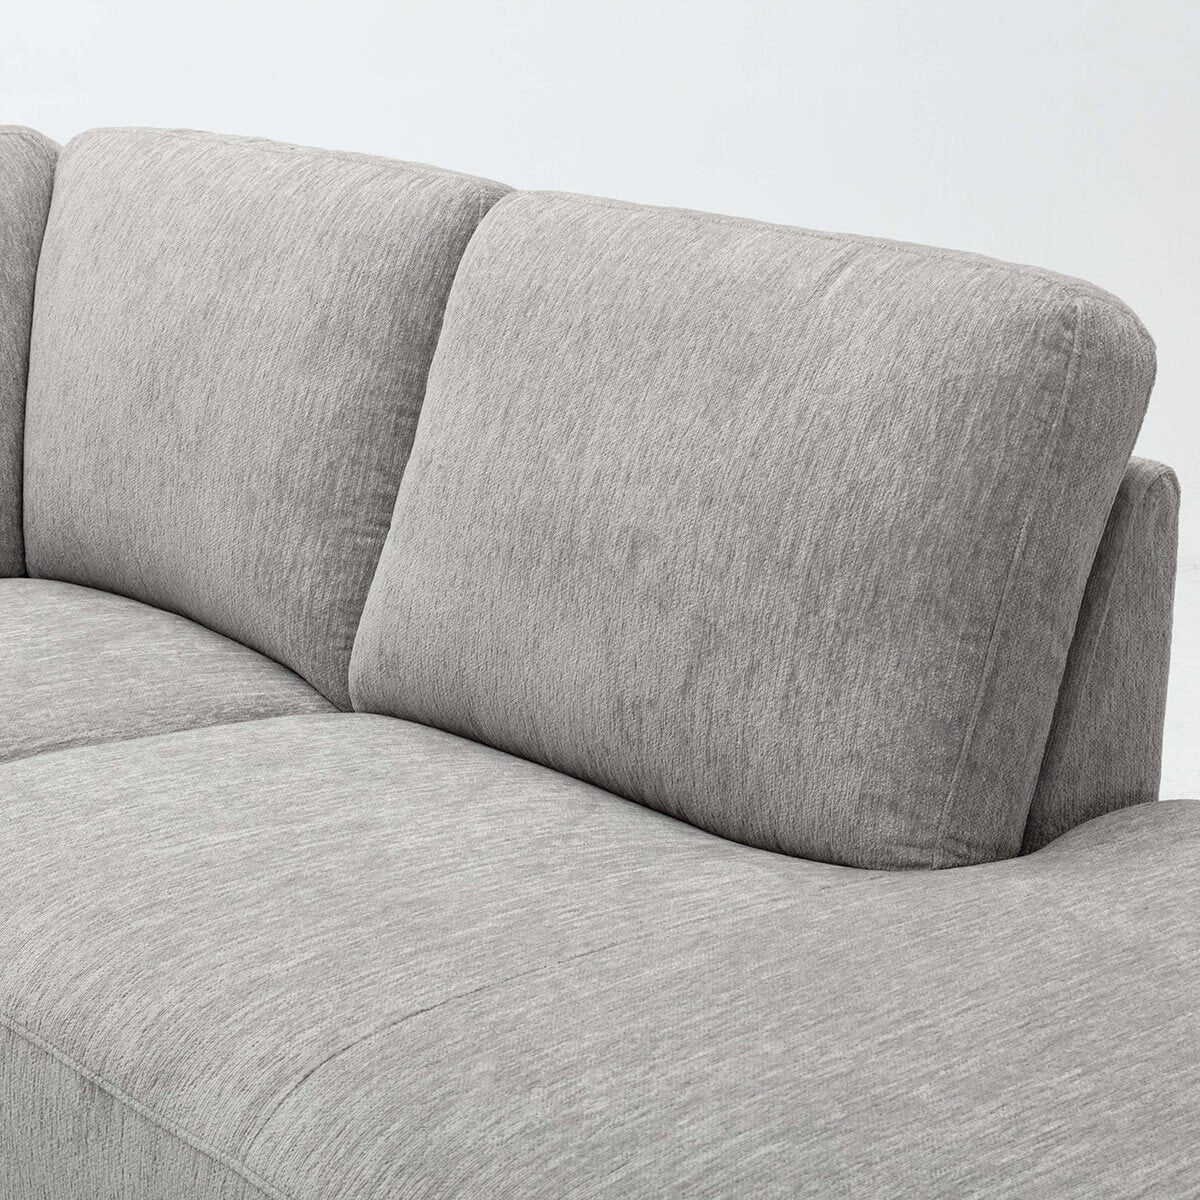 Zoy Sherwood Grey Fabric Sectional Sofa - Signature Retail Stores